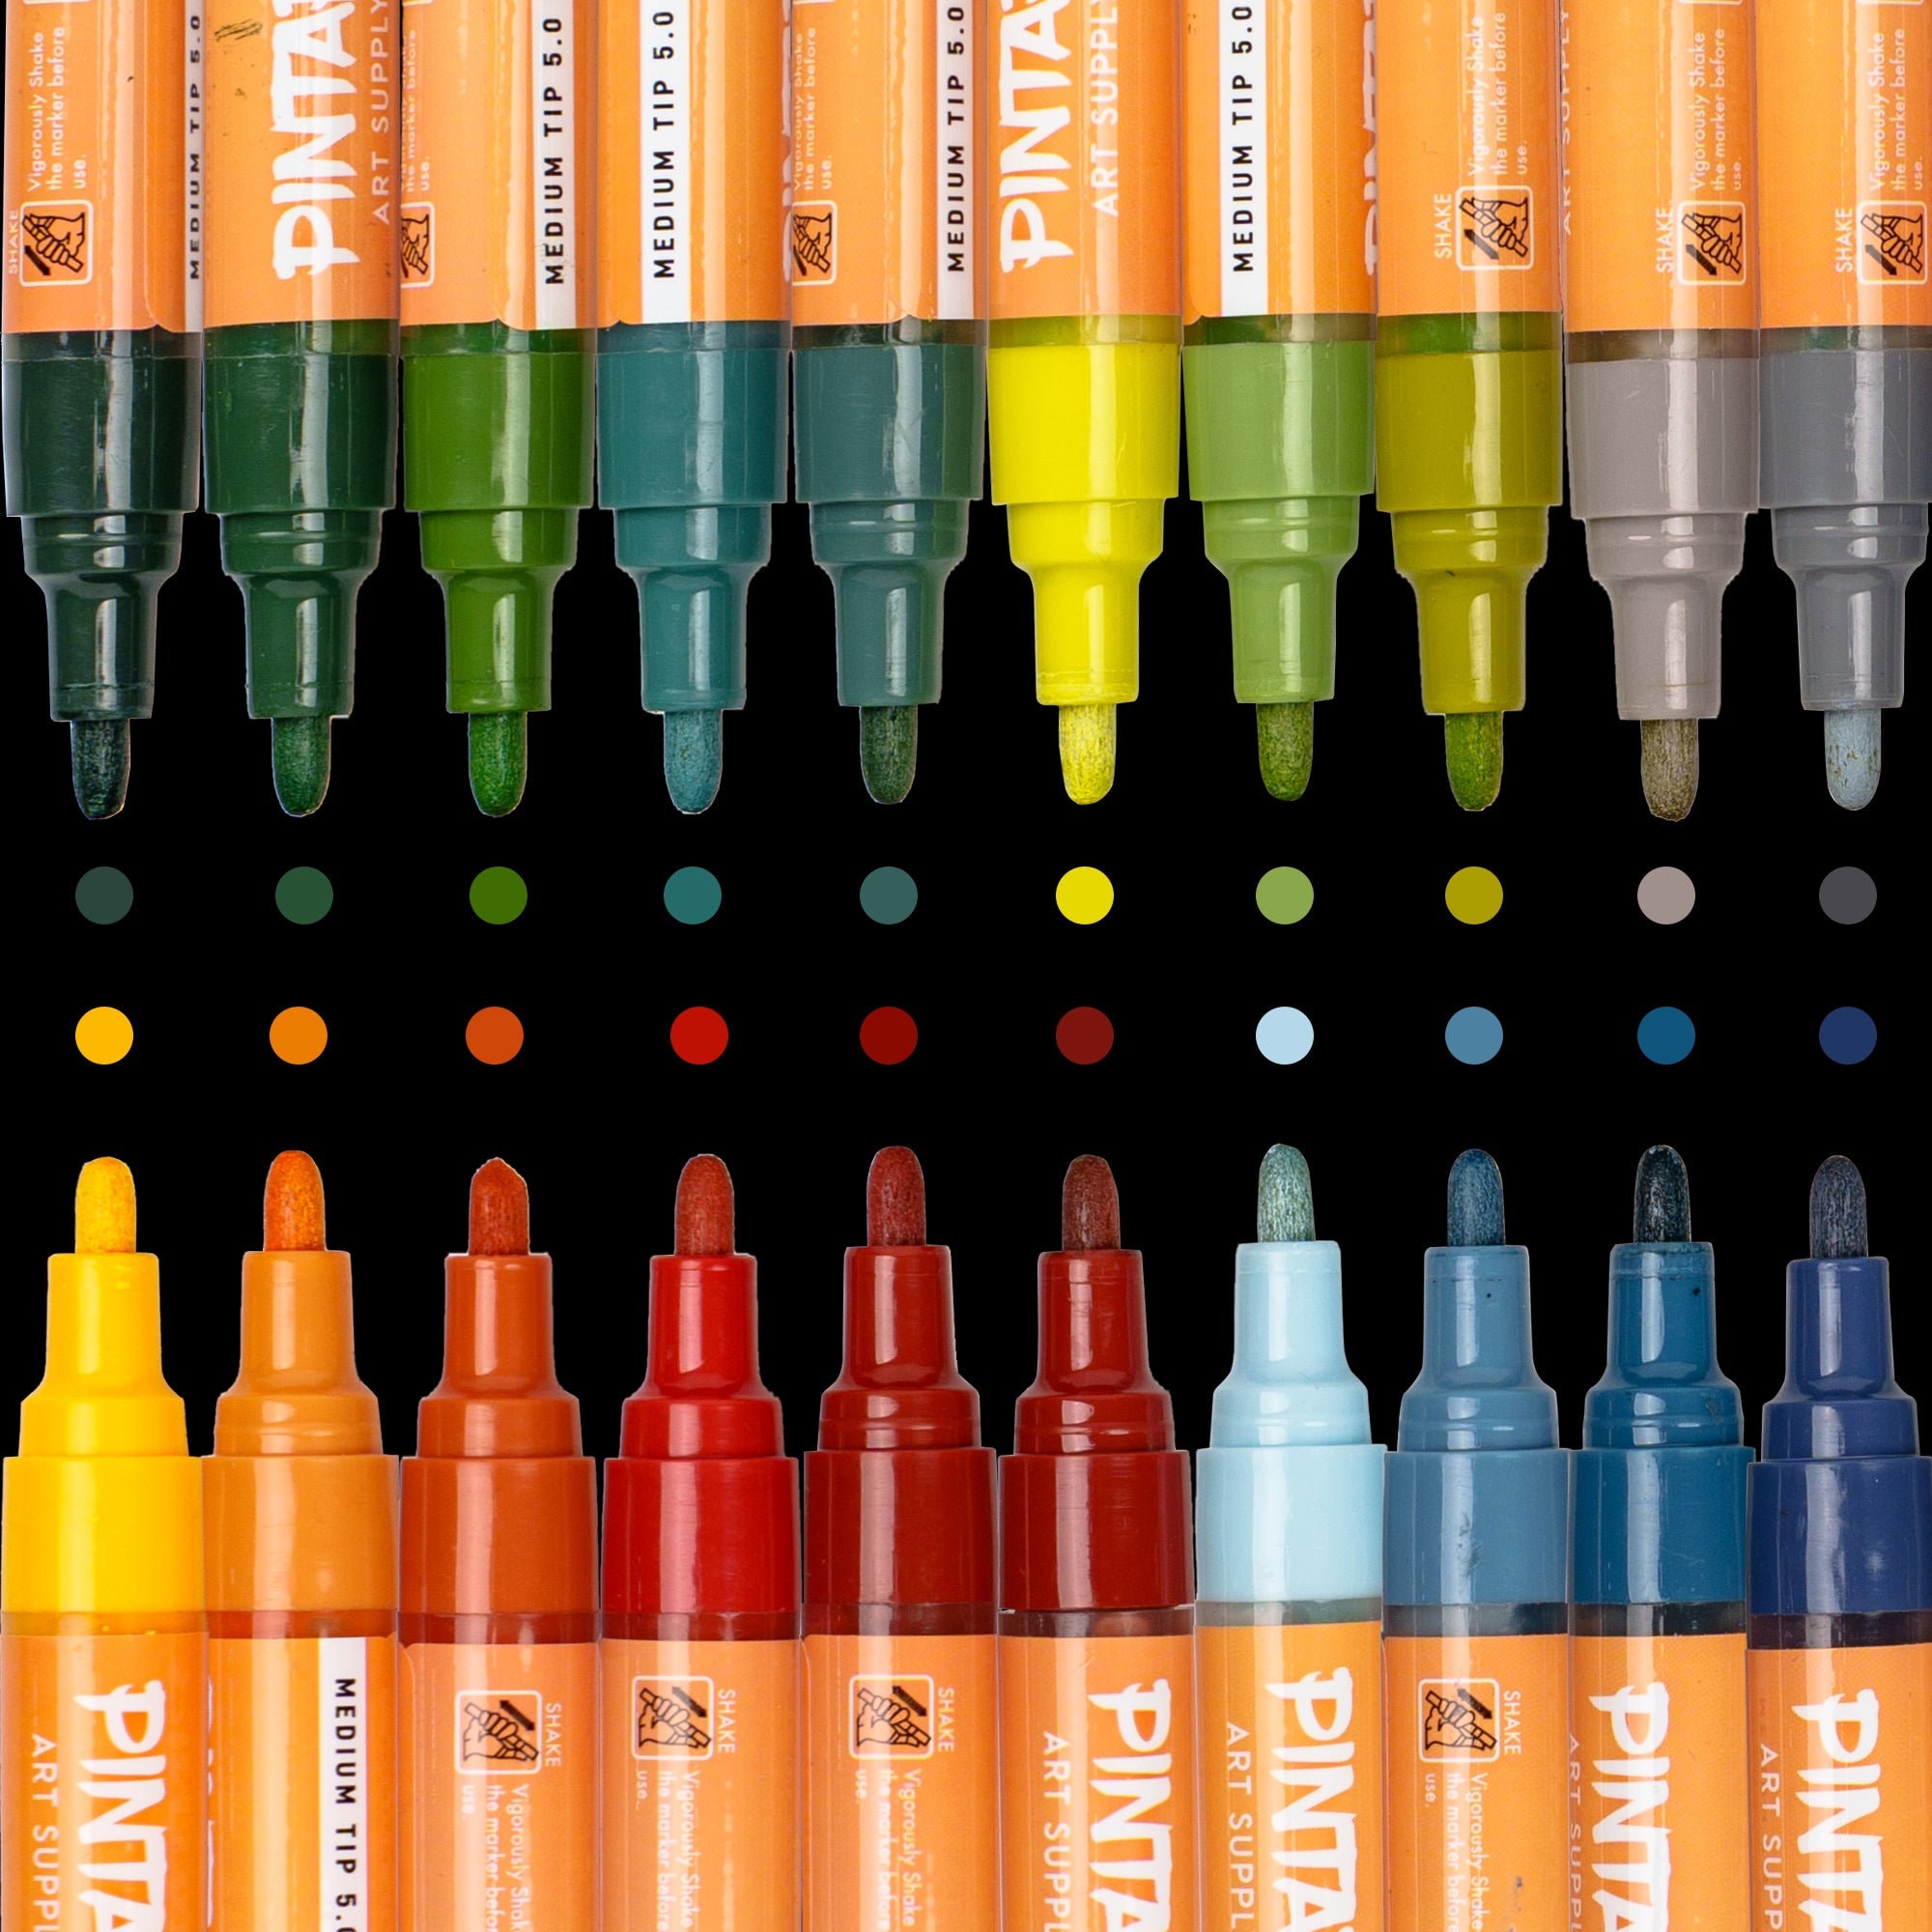 PINTAR Premium Acrylic Paint Pens - 1mm Fine Tip Pens For Rock Painting,  Ceramic Glass, Wood, Paper, Fabric & Porcelain, Water Resistant Paint Set,  Surface Pen, Craft Supplies, DIY Project